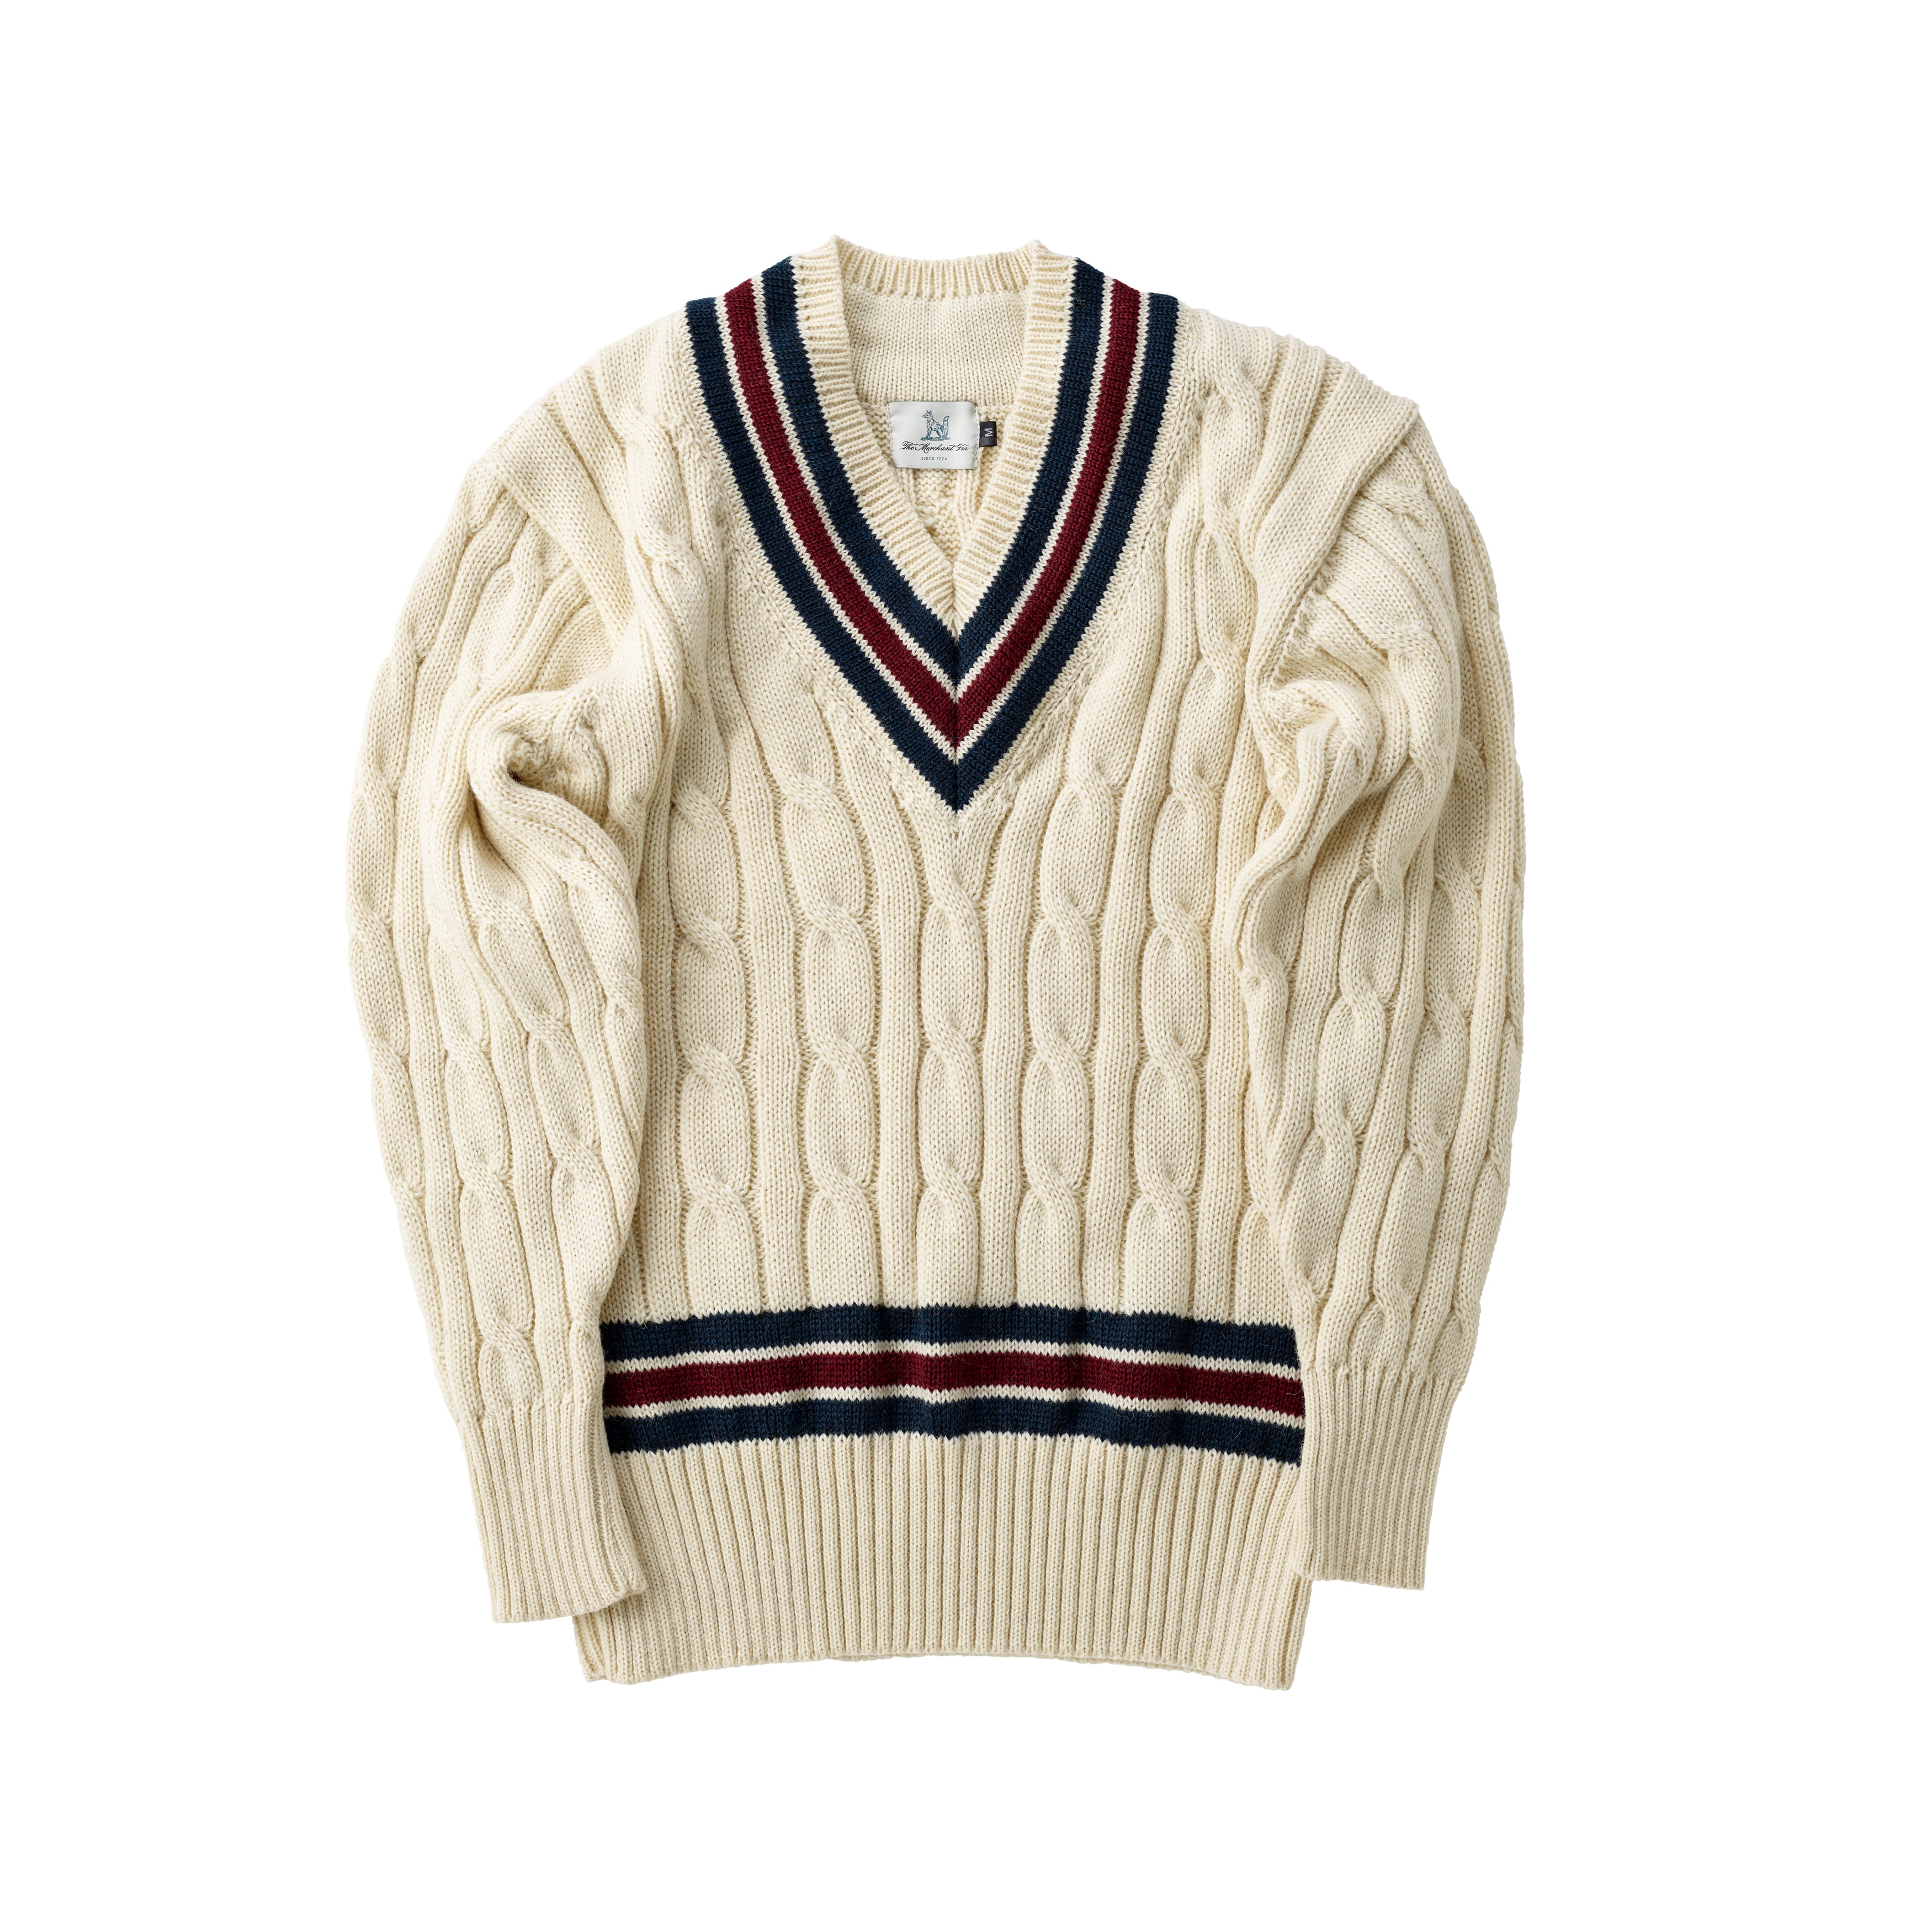 Fox Cricket Club Ecru Sweater with Bowler Green & Bordeaux Stripes